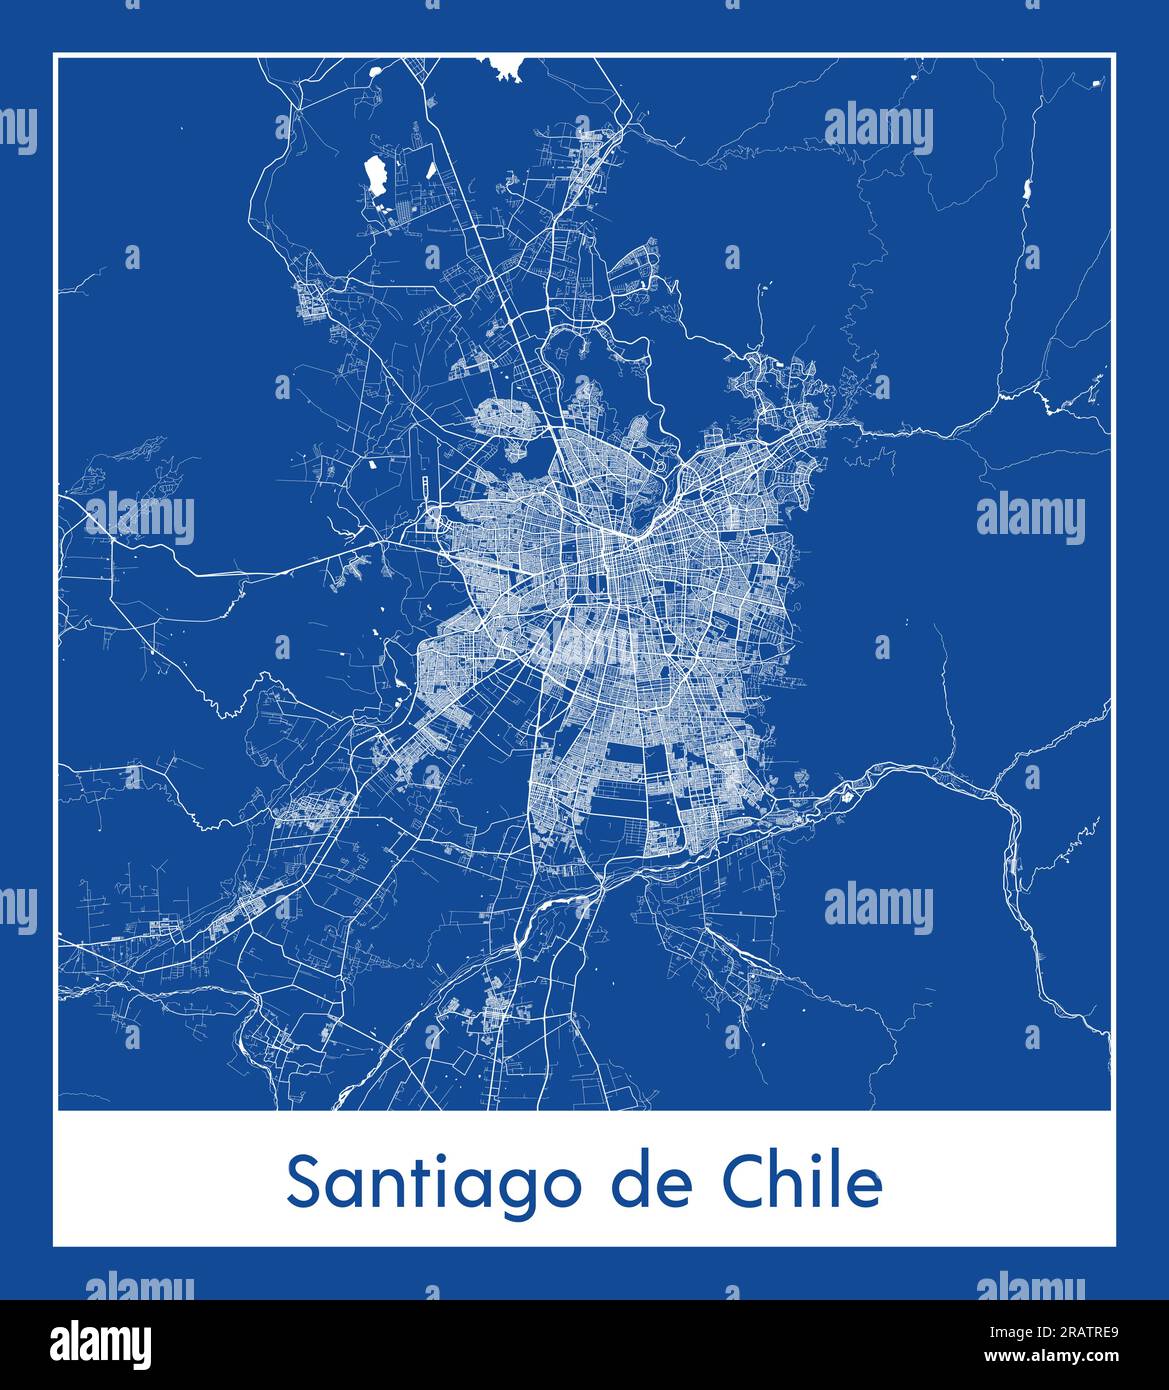 Santiago de Chile Chile South America City map blue print vector illustration Stock Vector